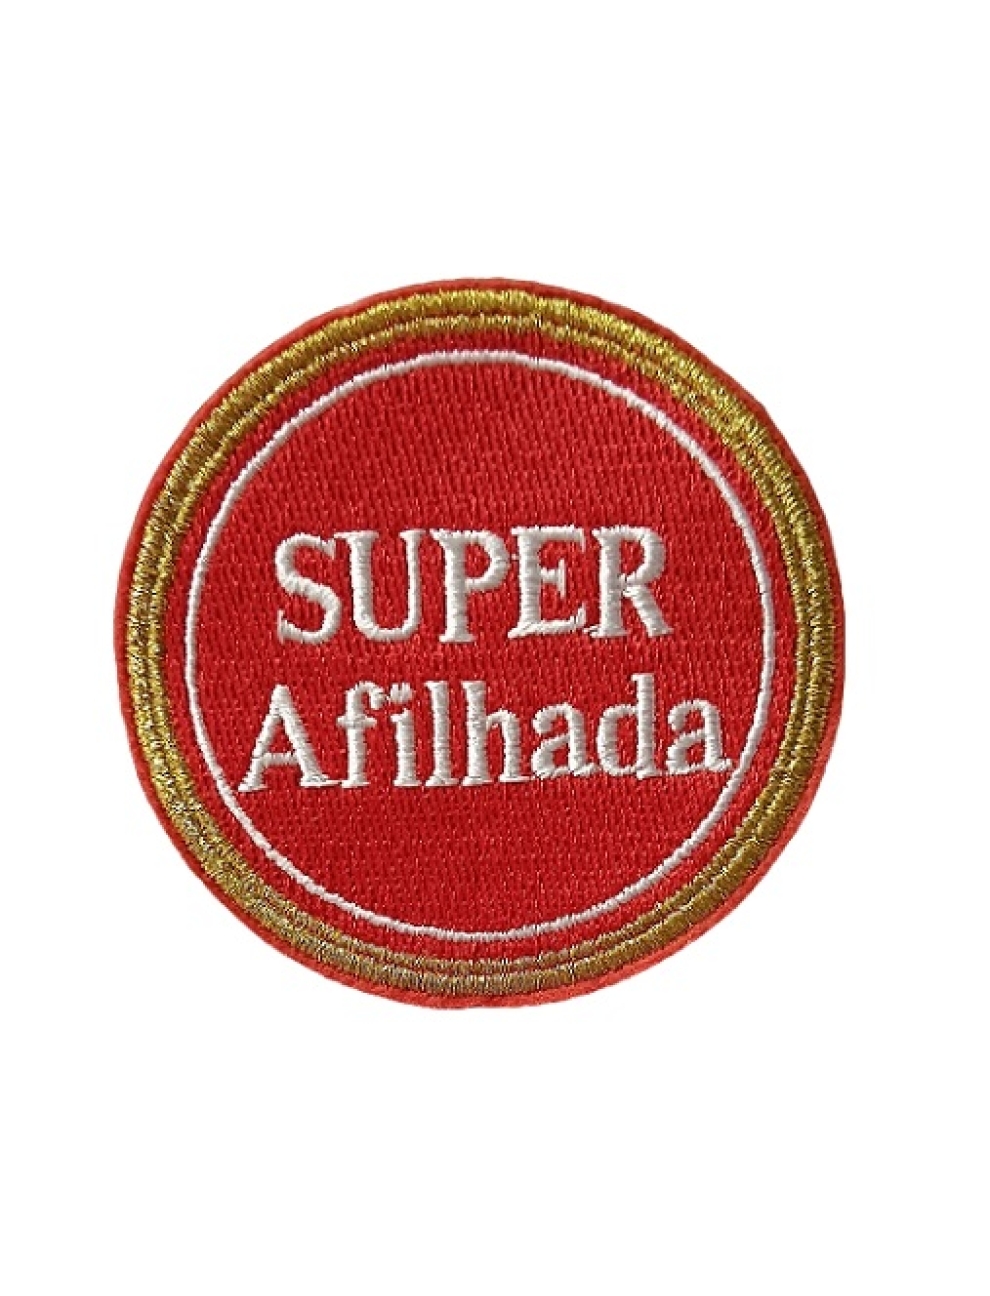 Super Afilhada